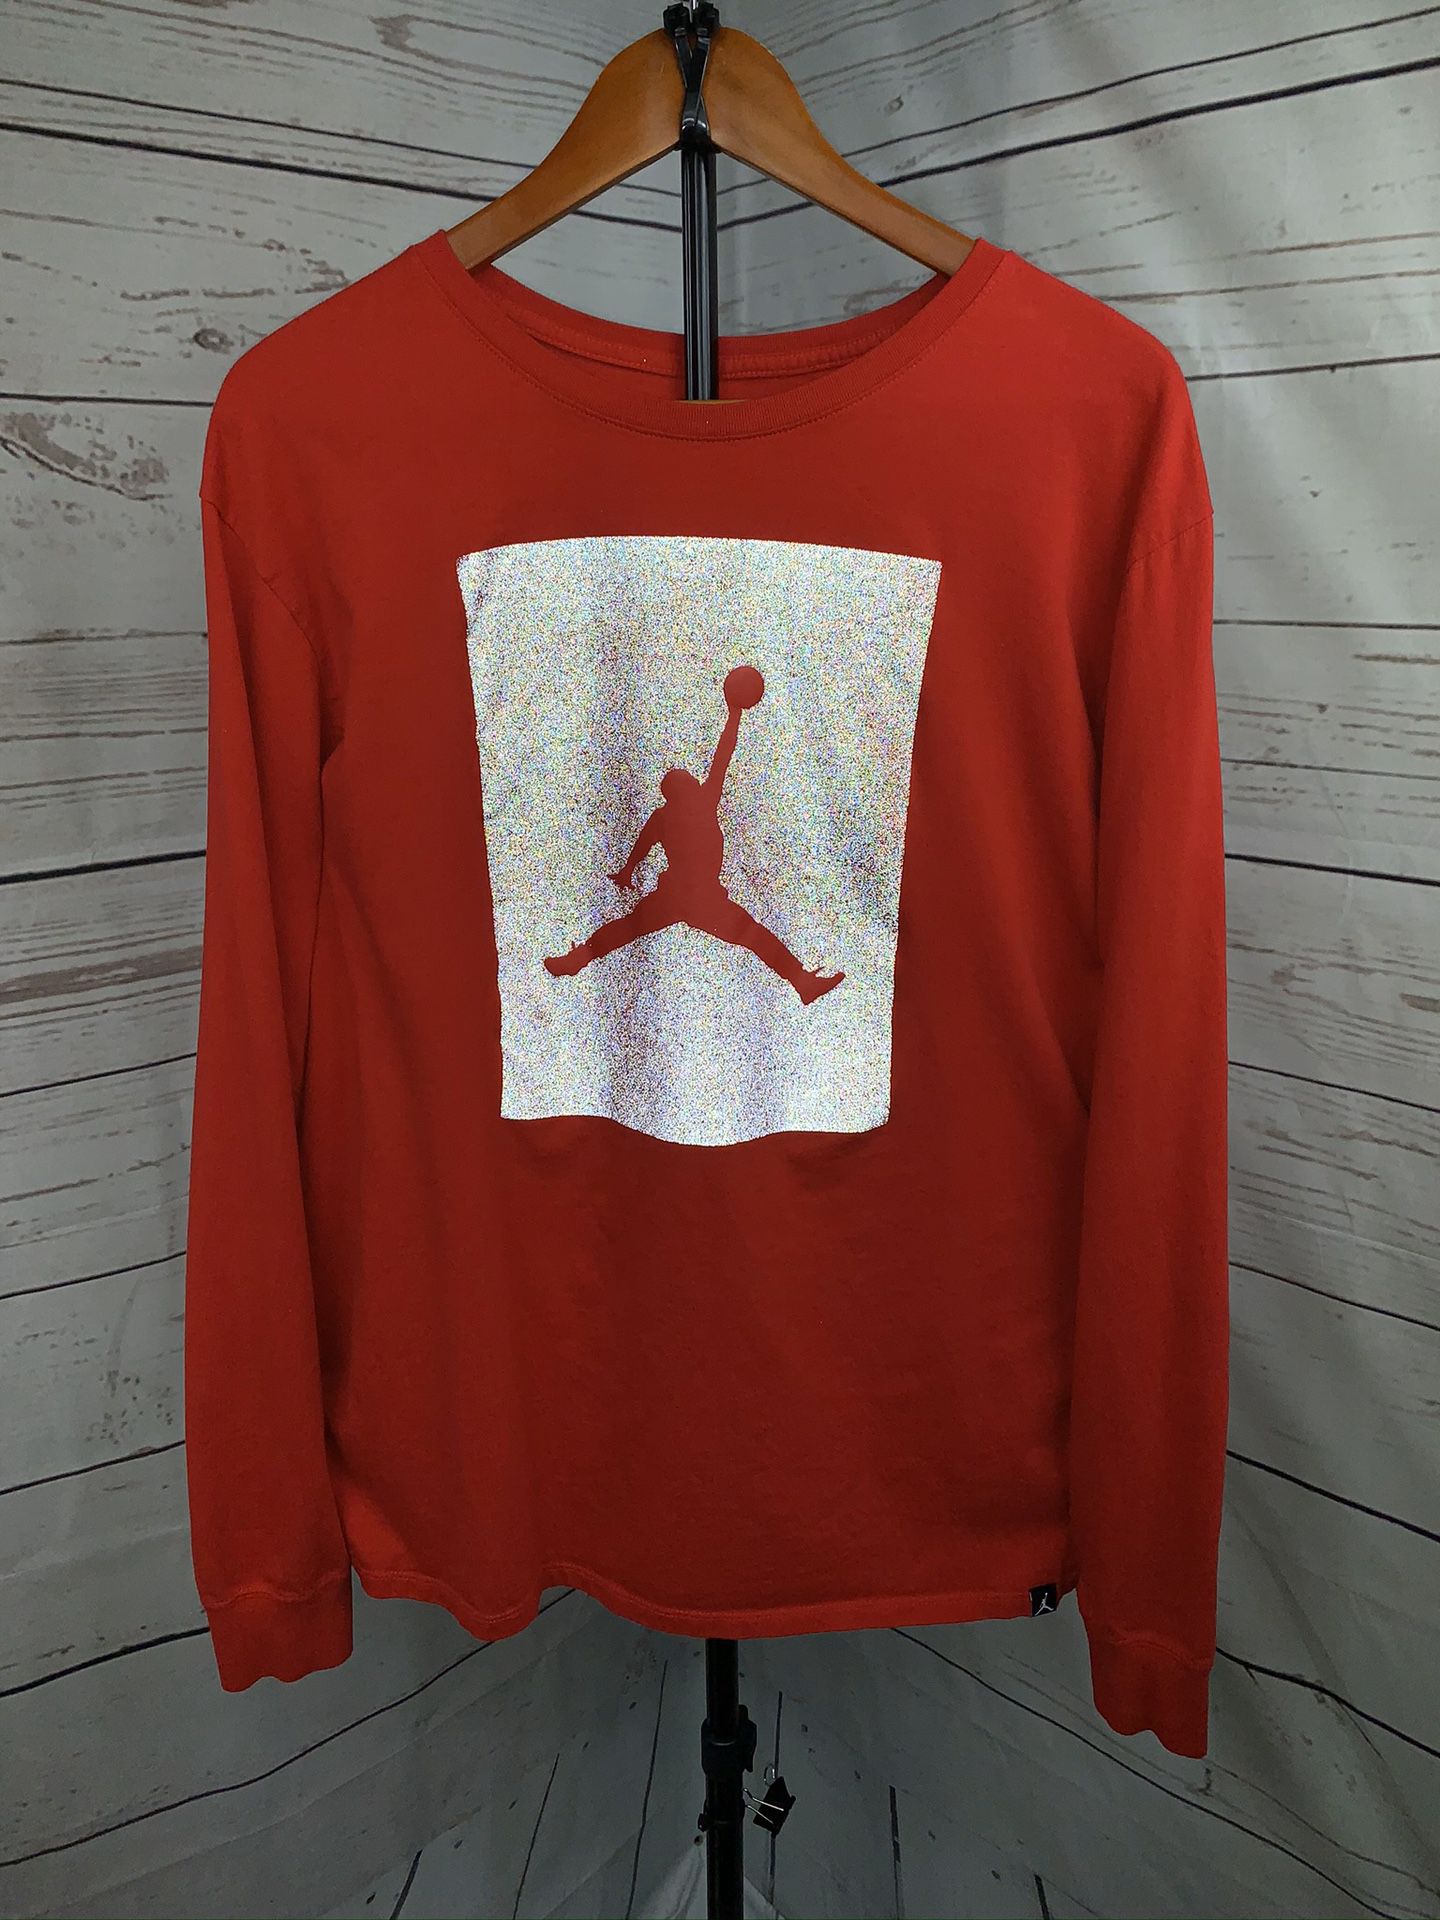 Air Jordan Sportswear size XL Red Reflective LS T Shirt worn 1 time LIKE NEW